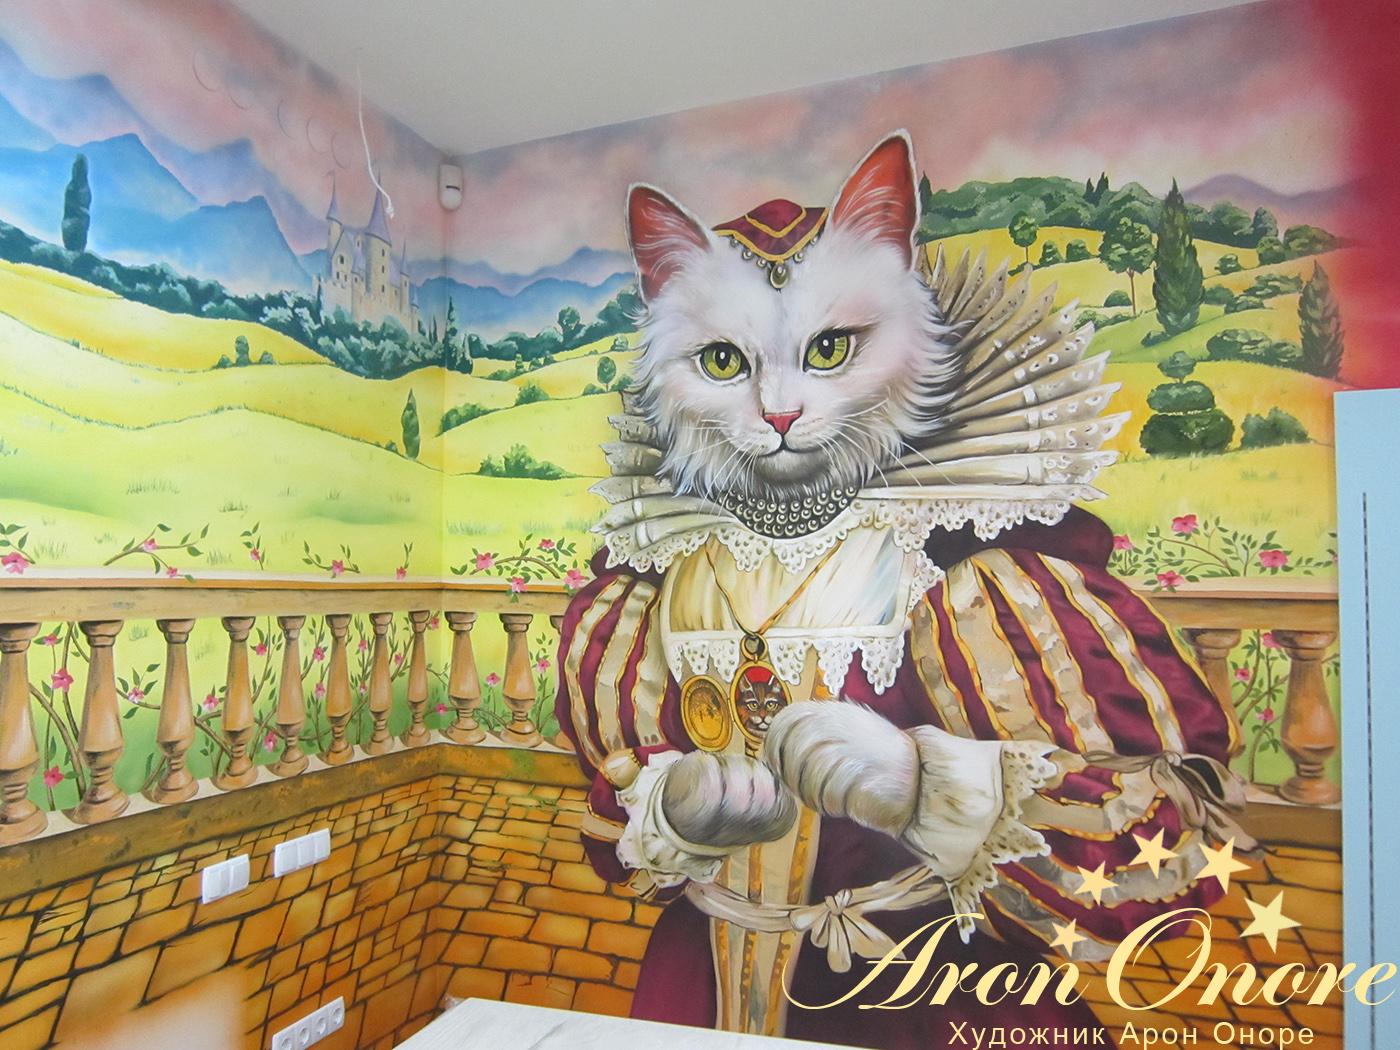 Рисунок на стене в комнате магазина детских товаров – сказочная кошка